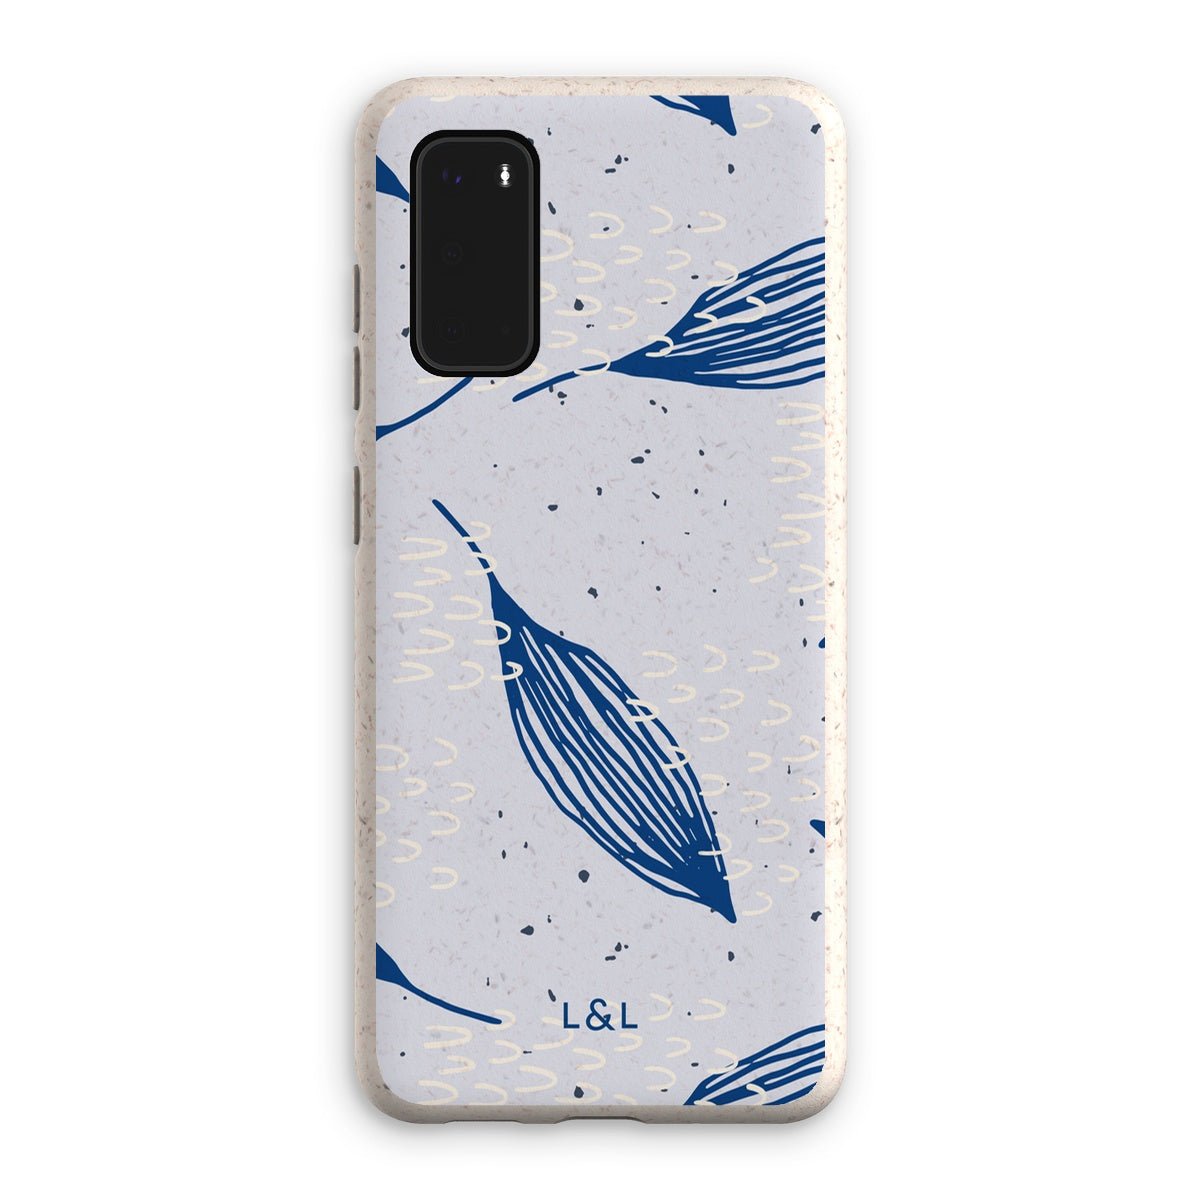 Seashell Eco Phone Case - Loam & Lore